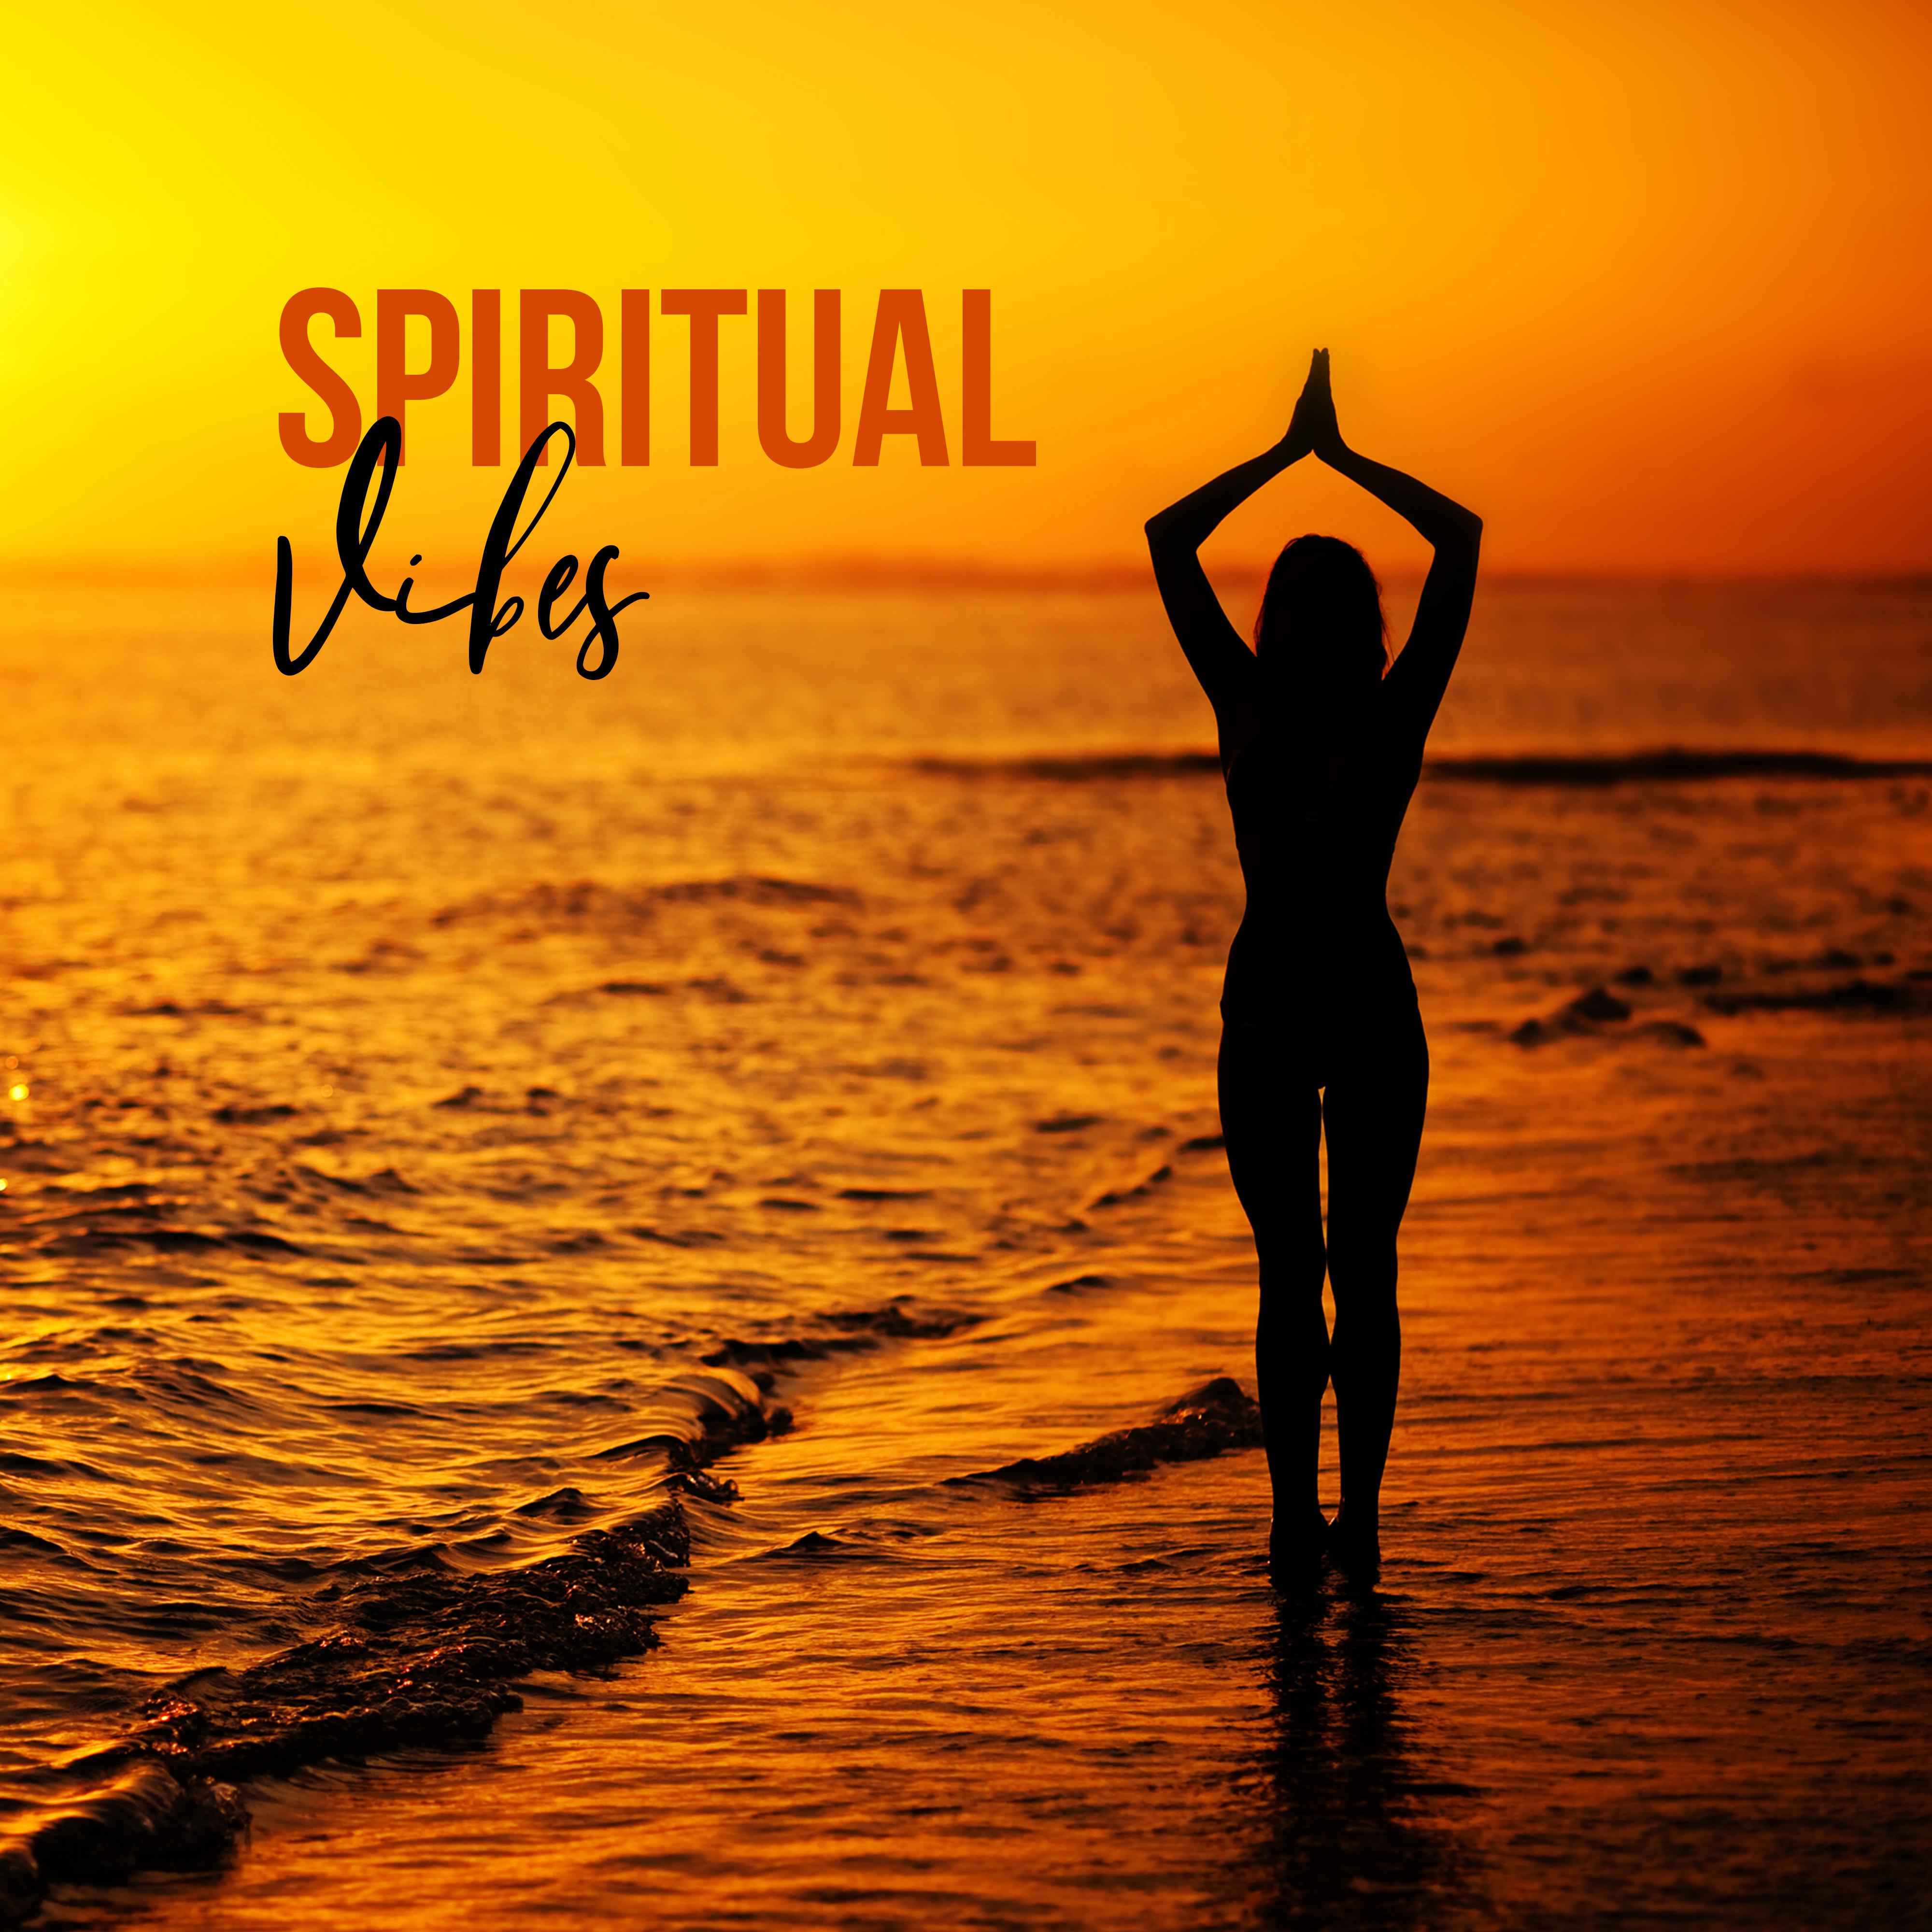 Spiritual Vibes – Meditation Music Zone, Yoga Music for Deep Harmony, Healing Meditation, Zen Chill Yoga, Mindfulness Relaxation